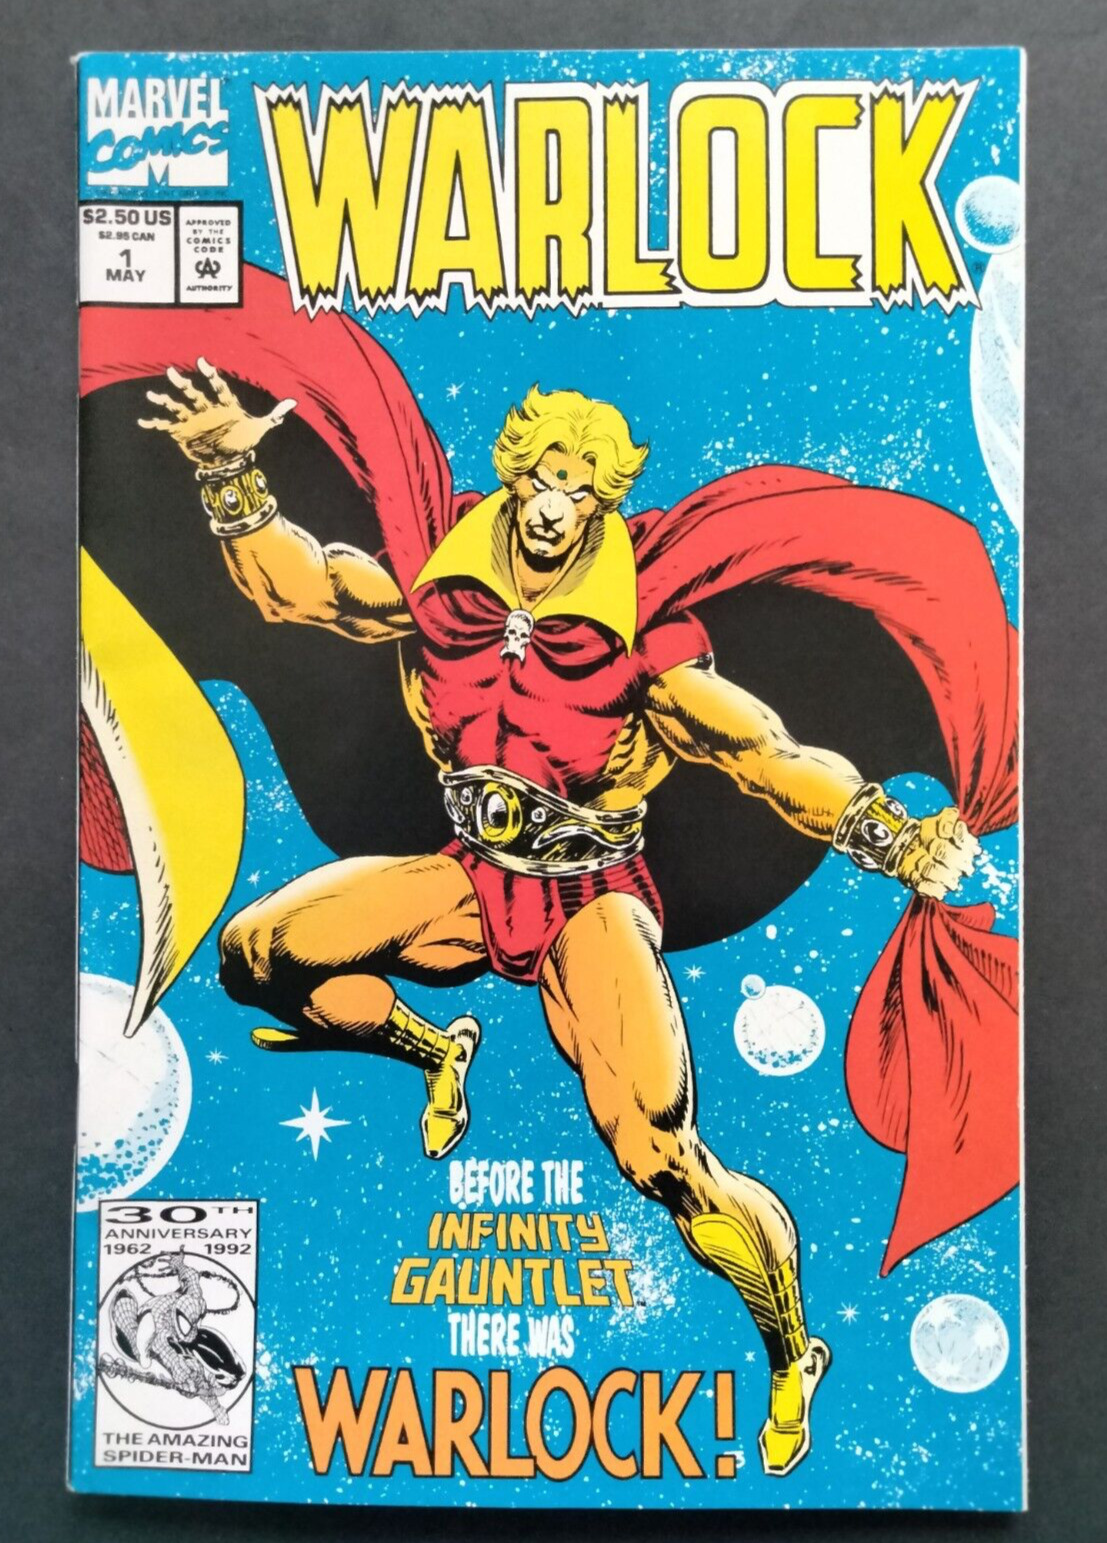 Warlock Vol.2 #1 1992 Marvel Comics Before The Infinity Gauntlet - Pre-owned